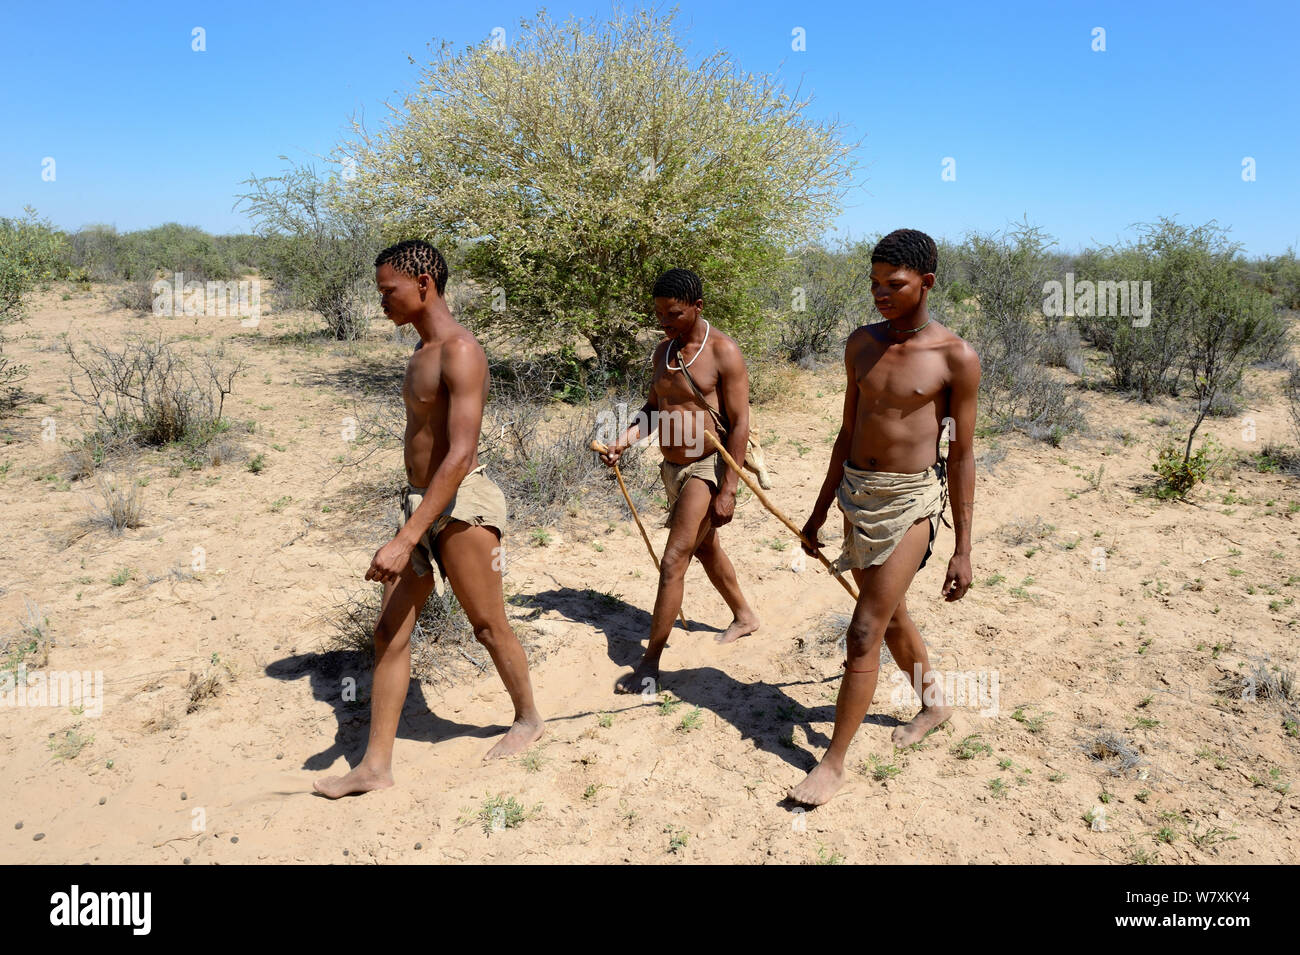 Naro San Bushmen walking in the bush to gather fruits and plants, Kalahari, Ghanzi region, Botswana, Africa. Dry season, October 2014. Stock Photo